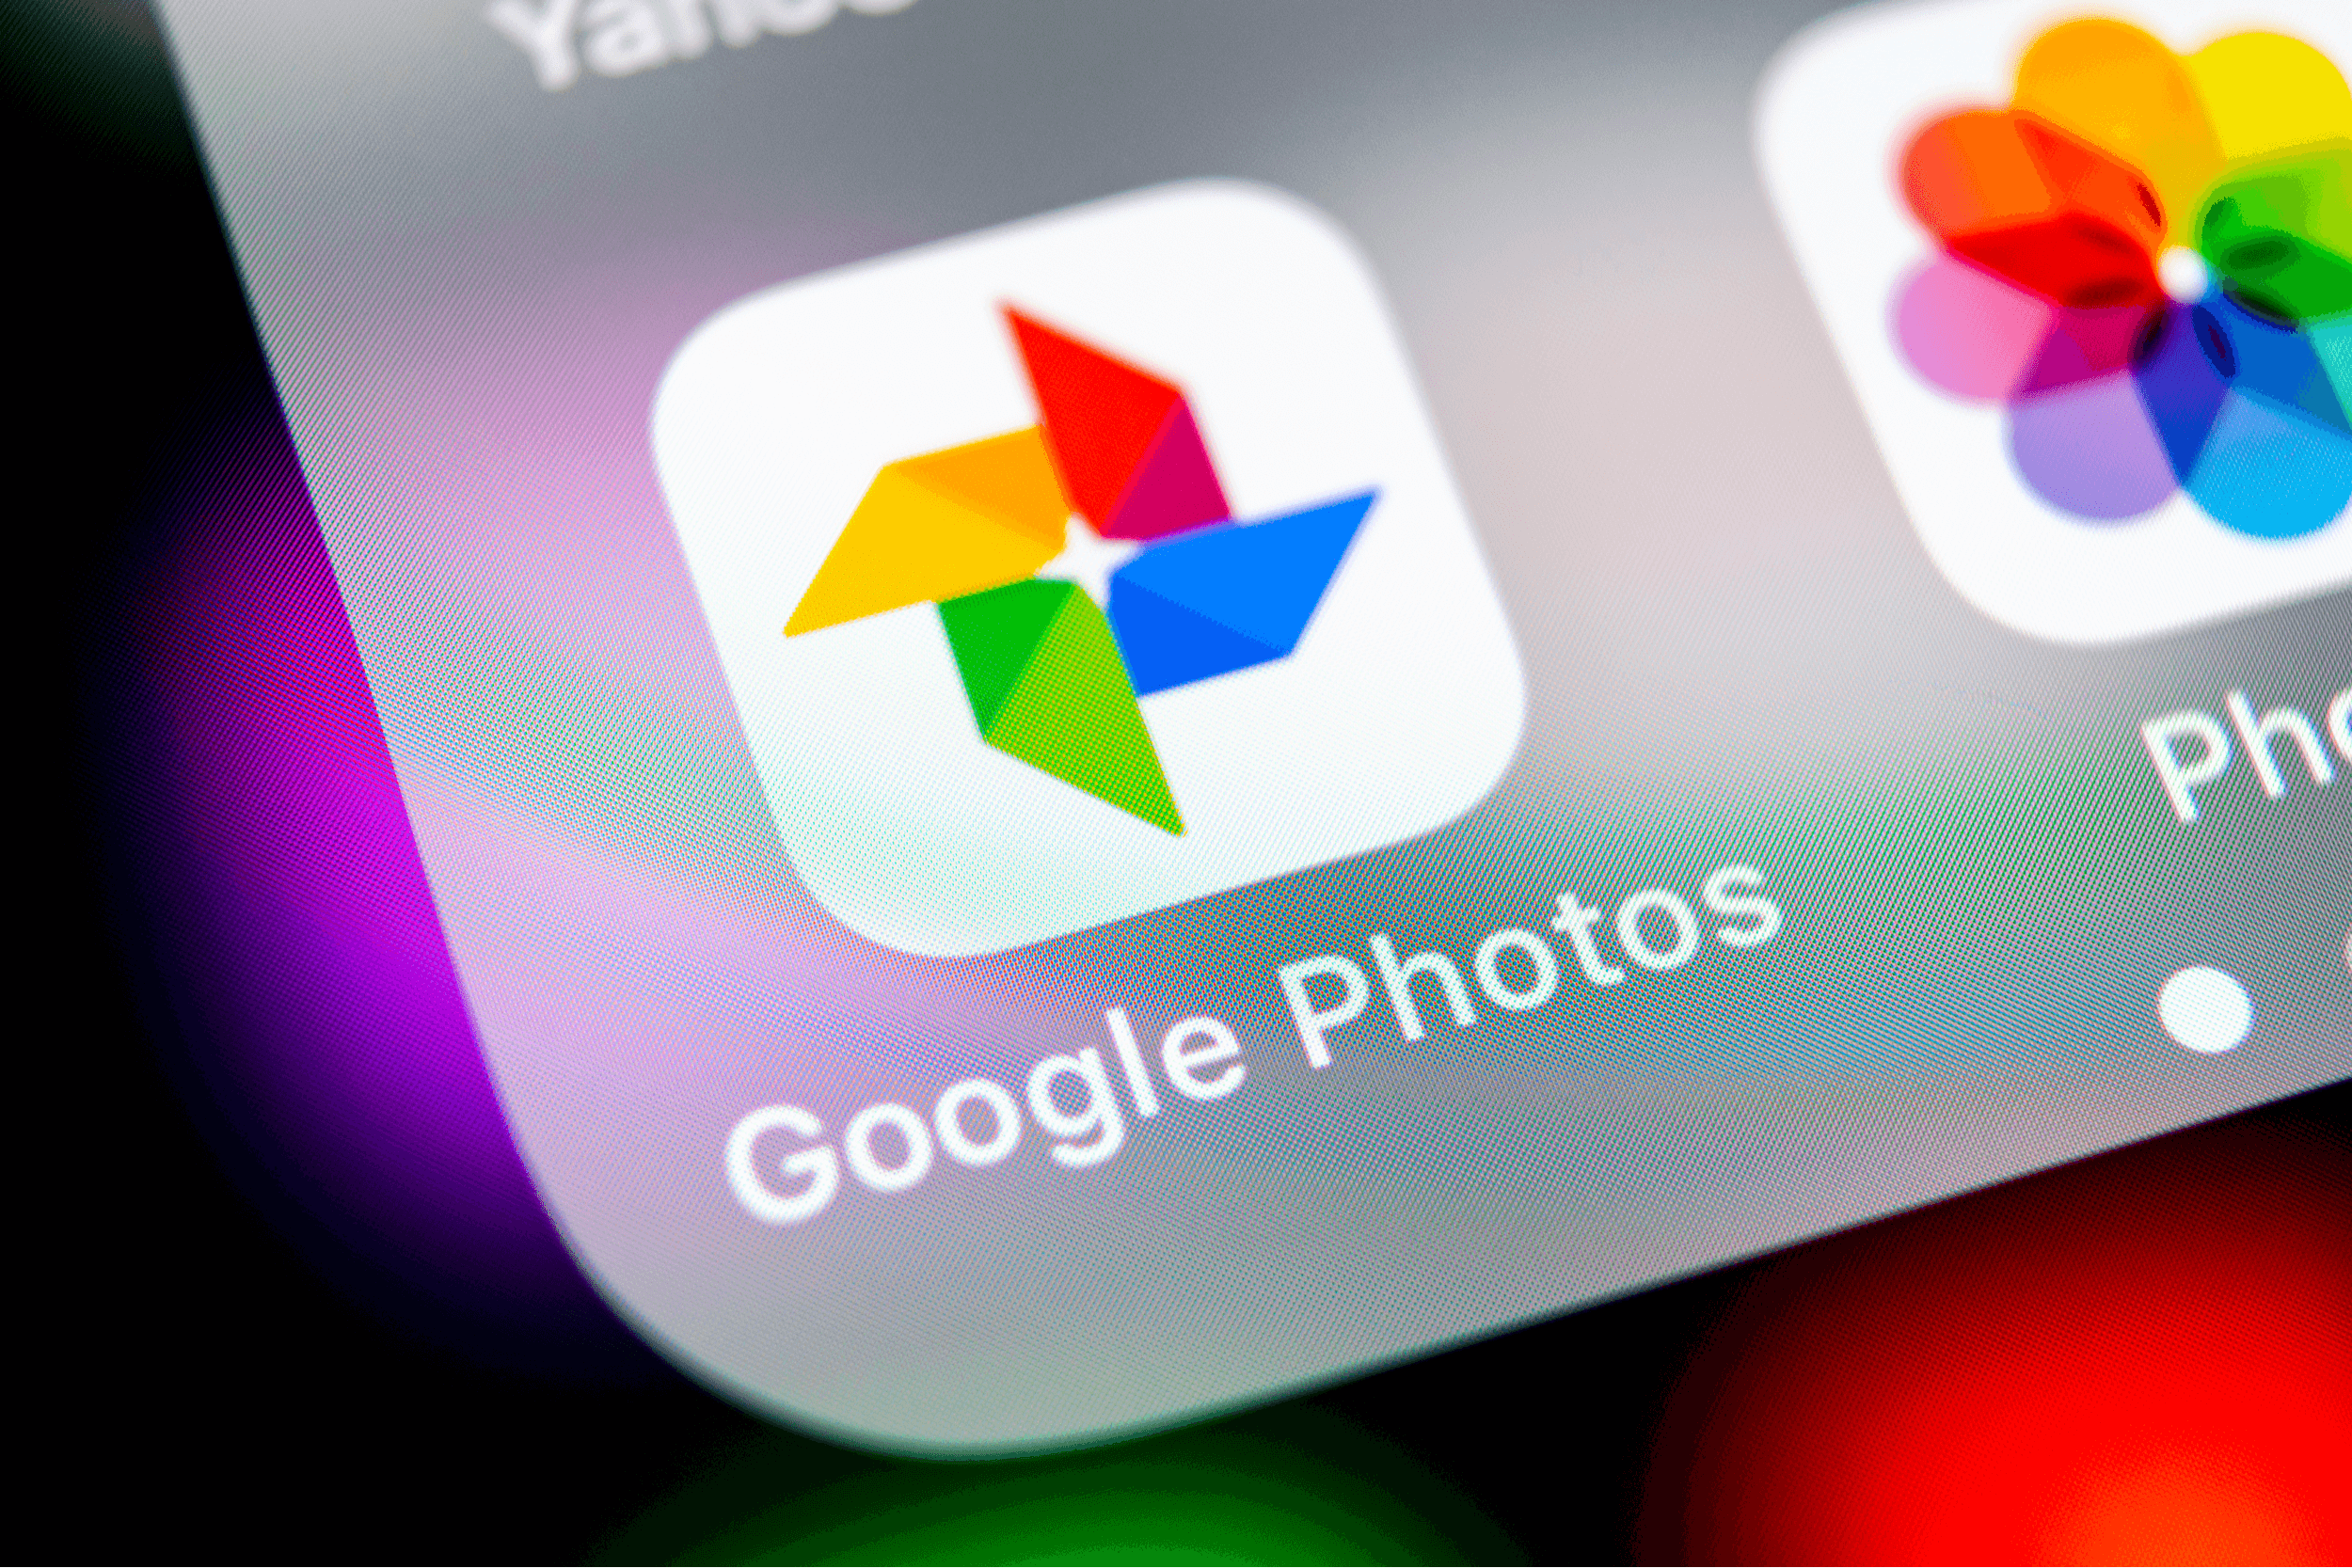 Google Photos plus application icon on Apple iPhone X screen close-up. Google plus Photos icon. Google photos application. Social media network